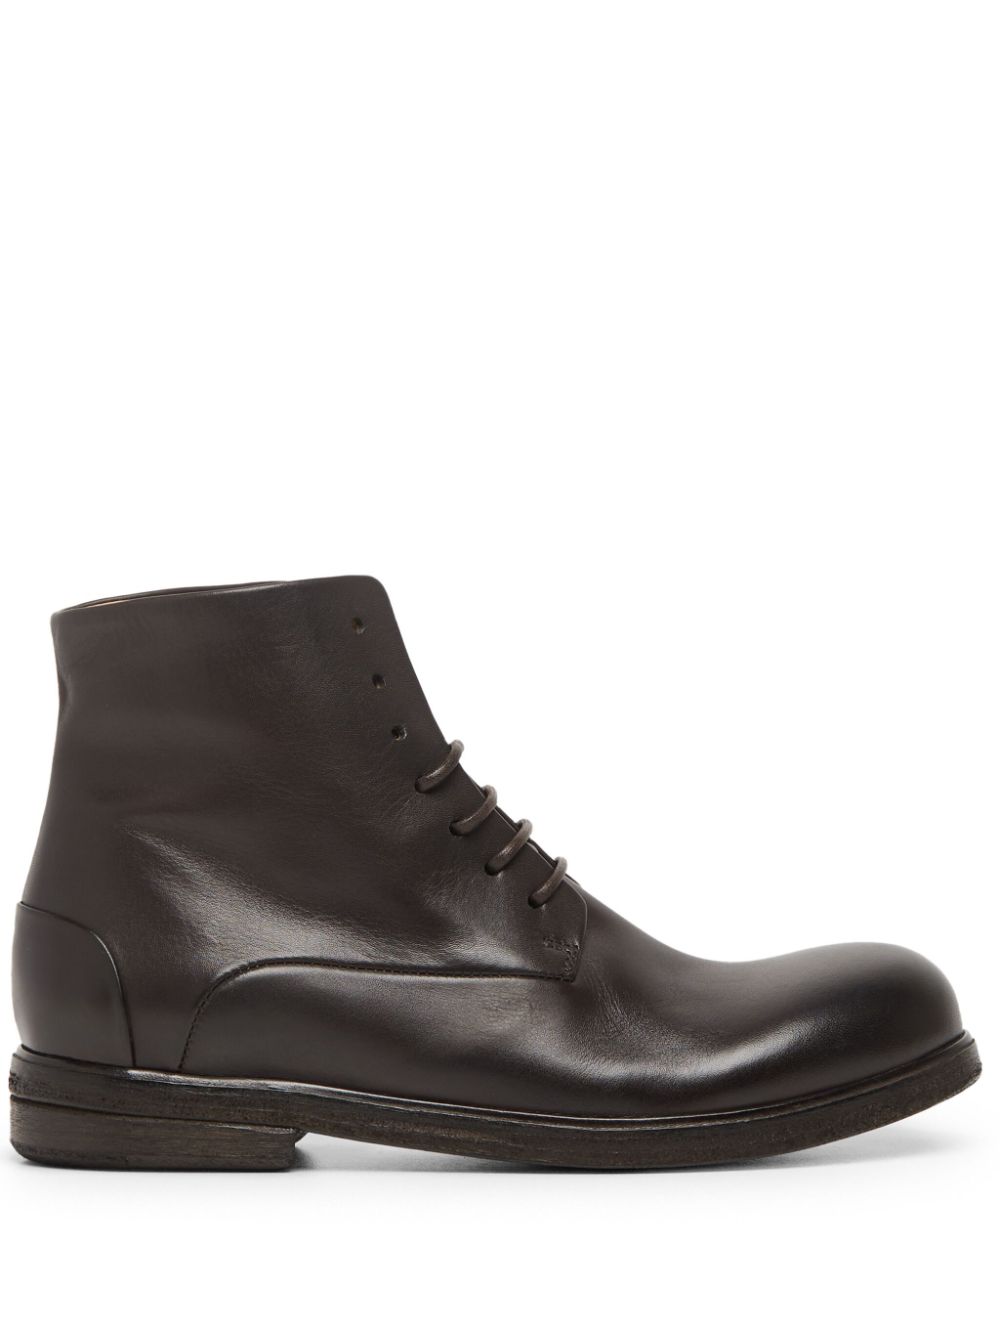 Marsèll leather ankle boots - Brown von Marsèll